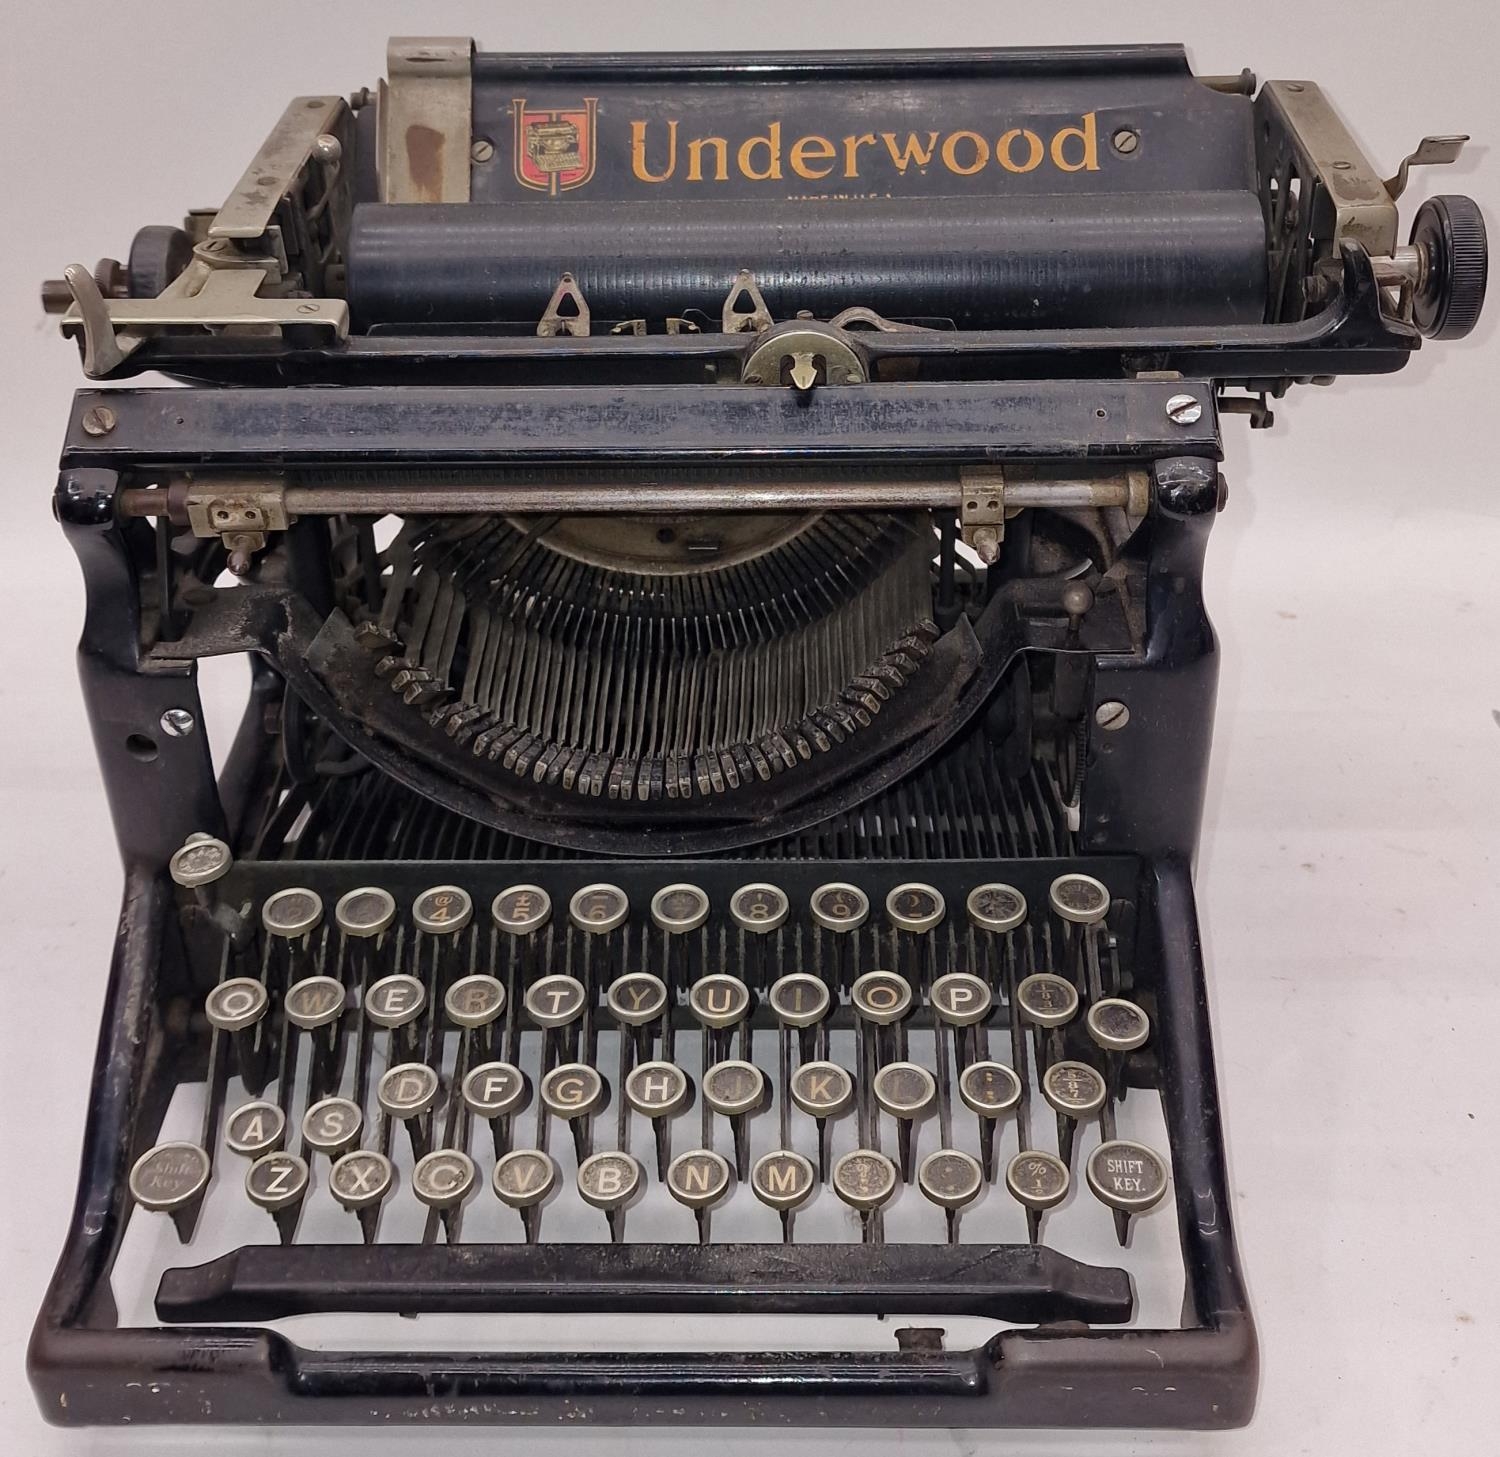 Vintage Underwood typewriter.